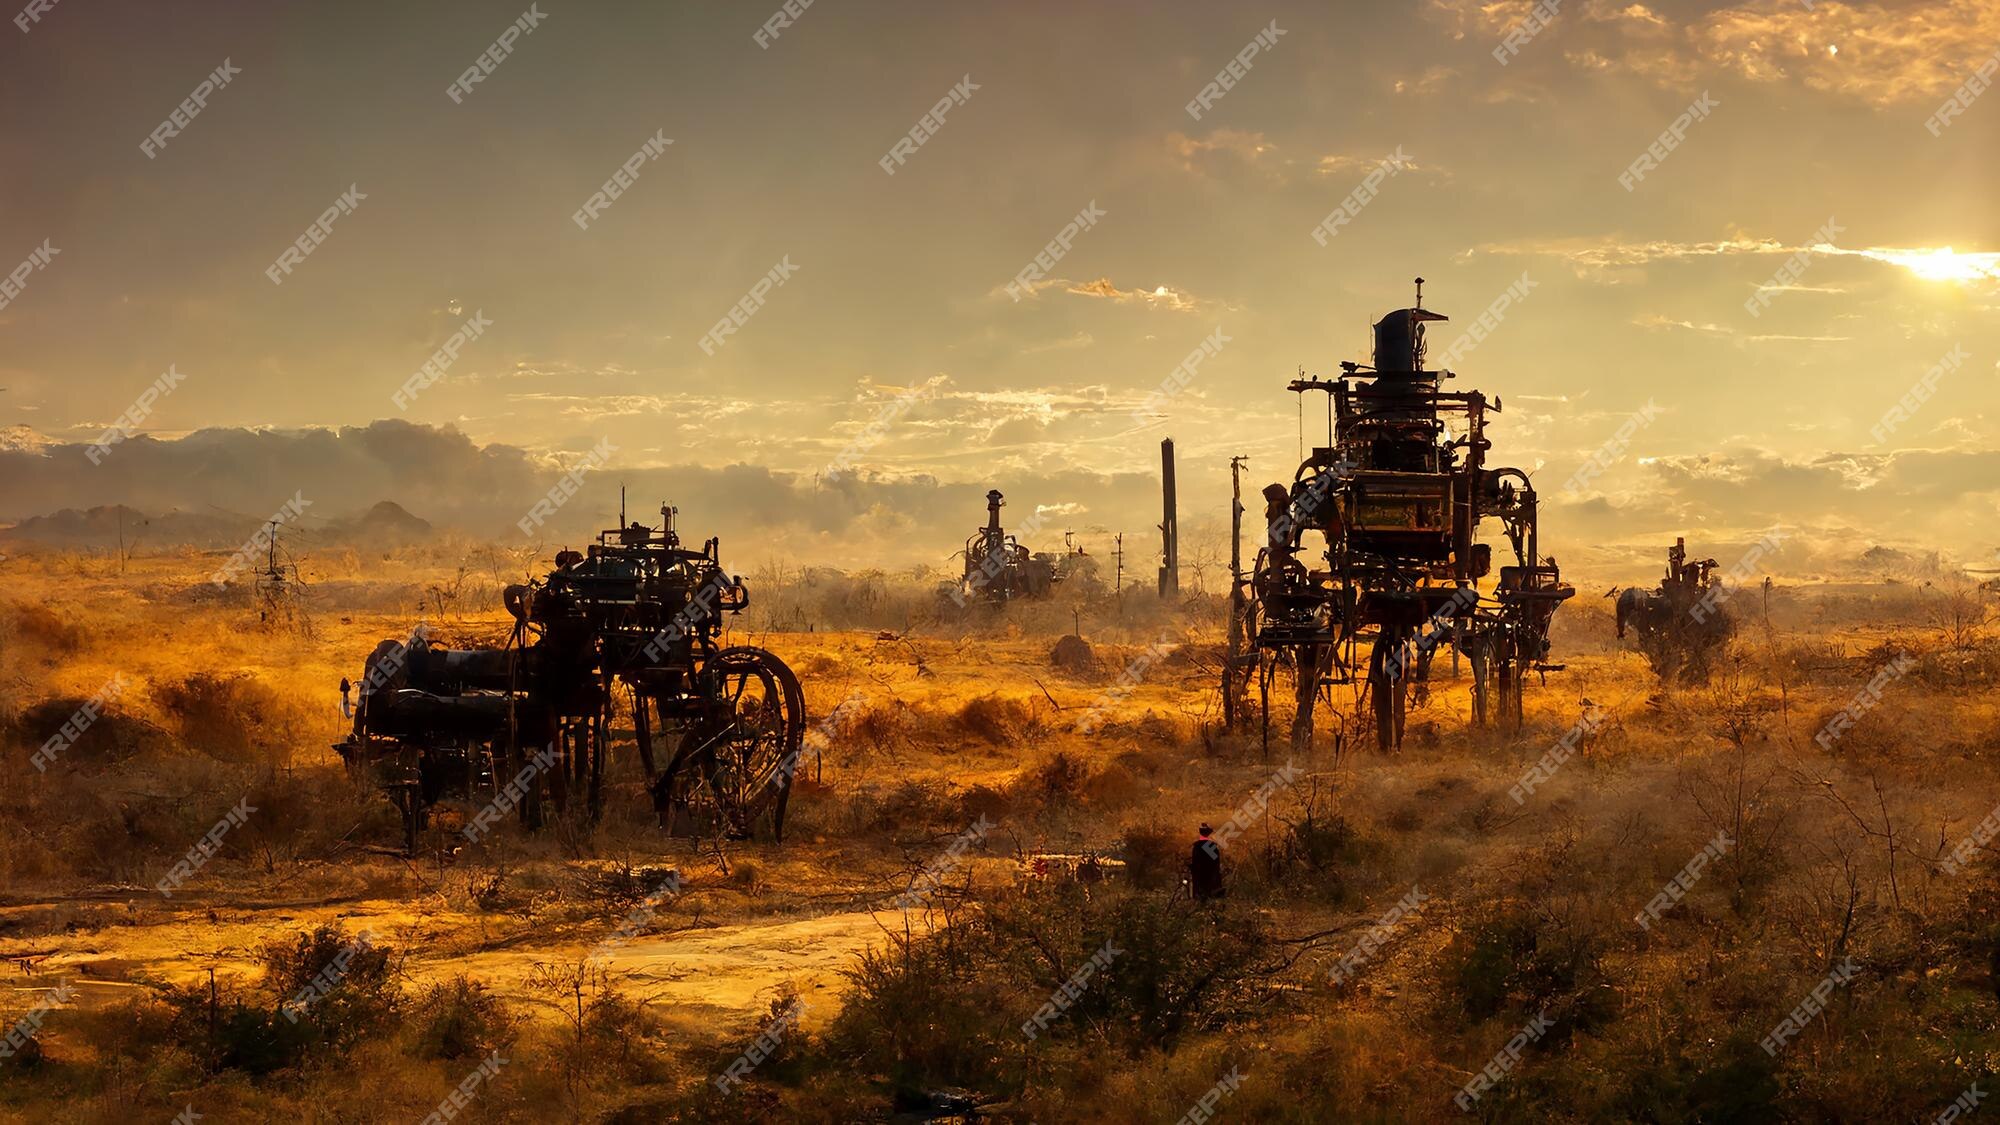 agricultural-steampunk-machines-wild-west-landscape-art-illustration_87538-3027.jpg